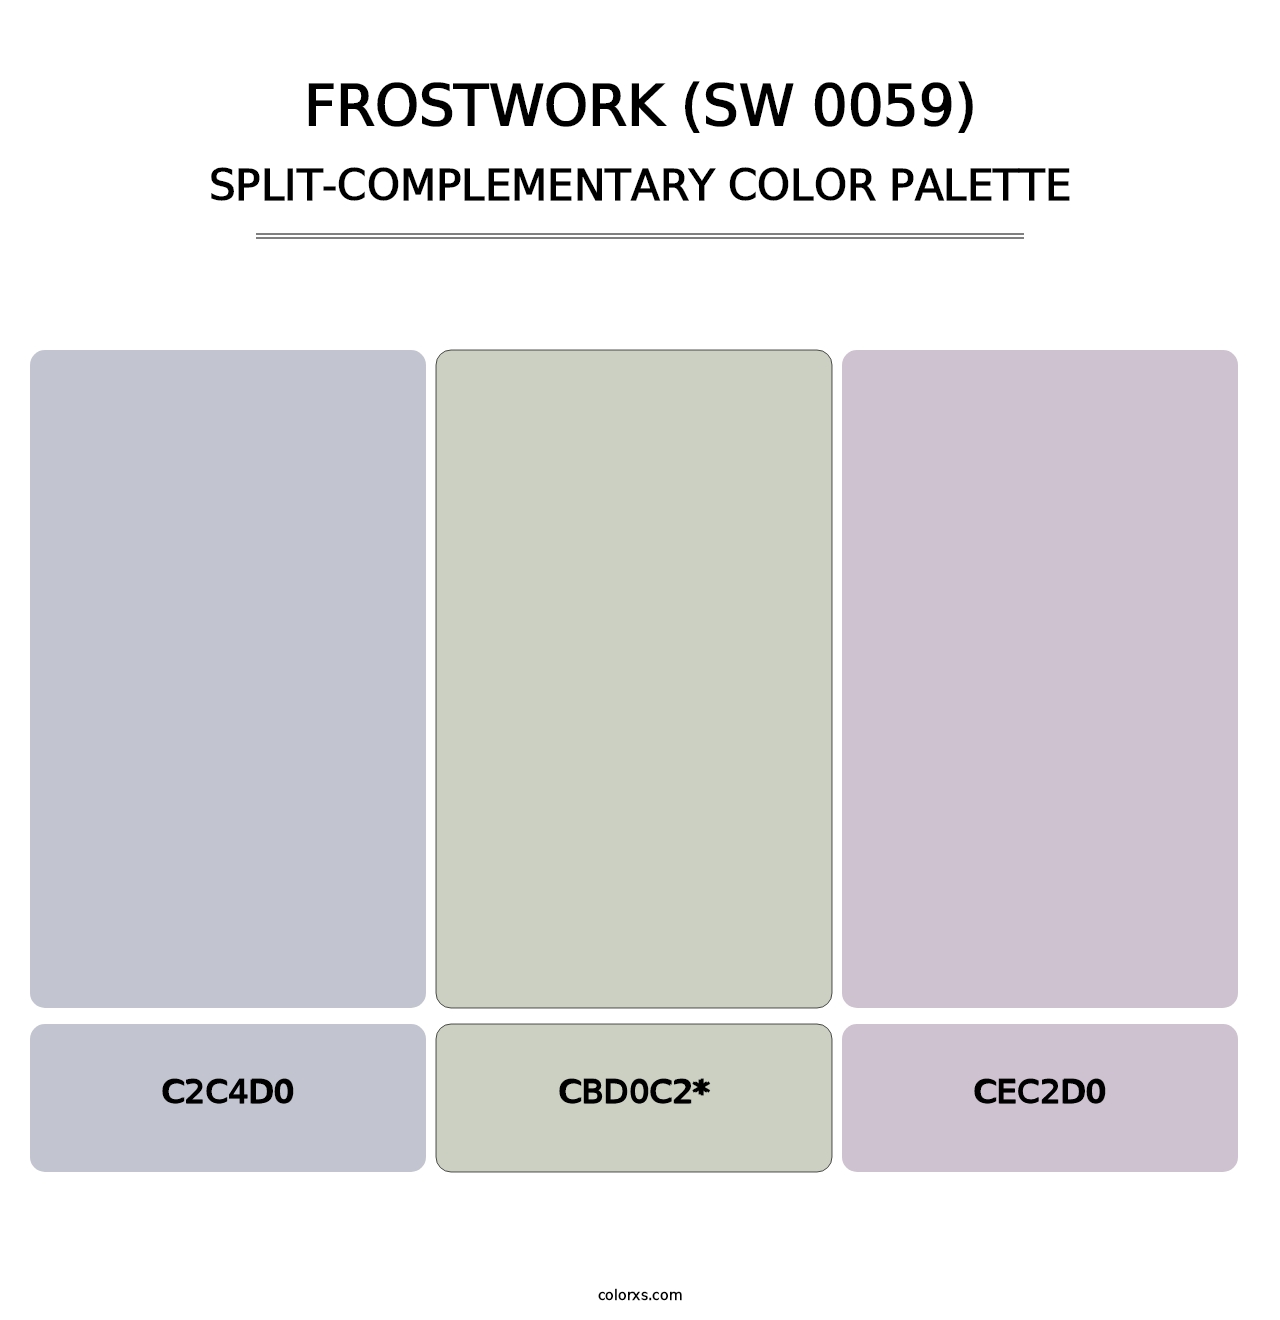 Frostwork (SW 0059) - Split-Complementary Color Palette